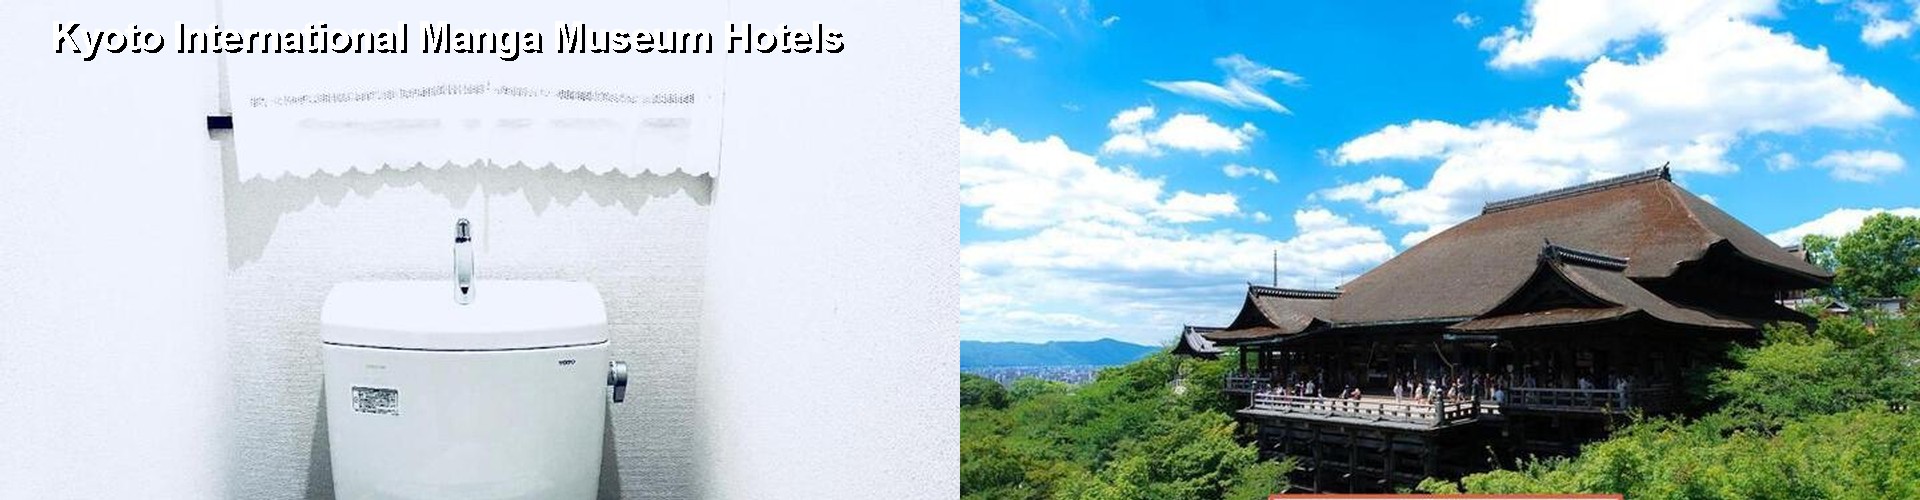 5 Best Hotels near Kyoto International Manga Museum